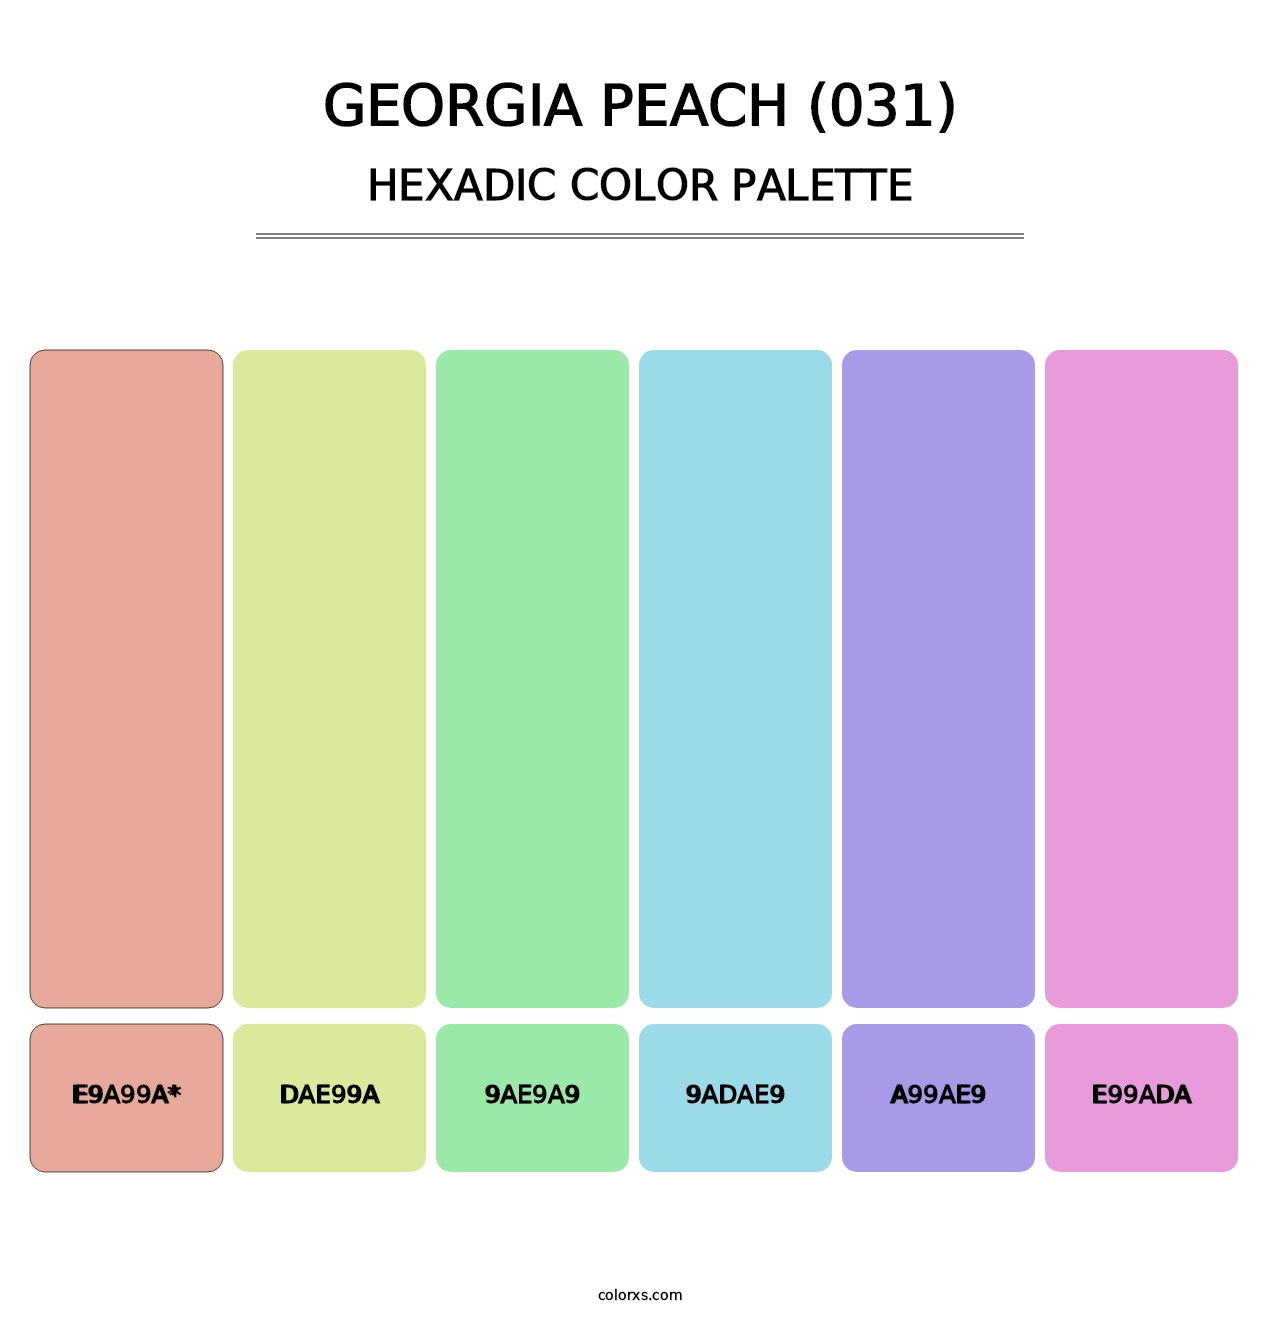 Georgia Peach (031) - Hexadic Color Palette